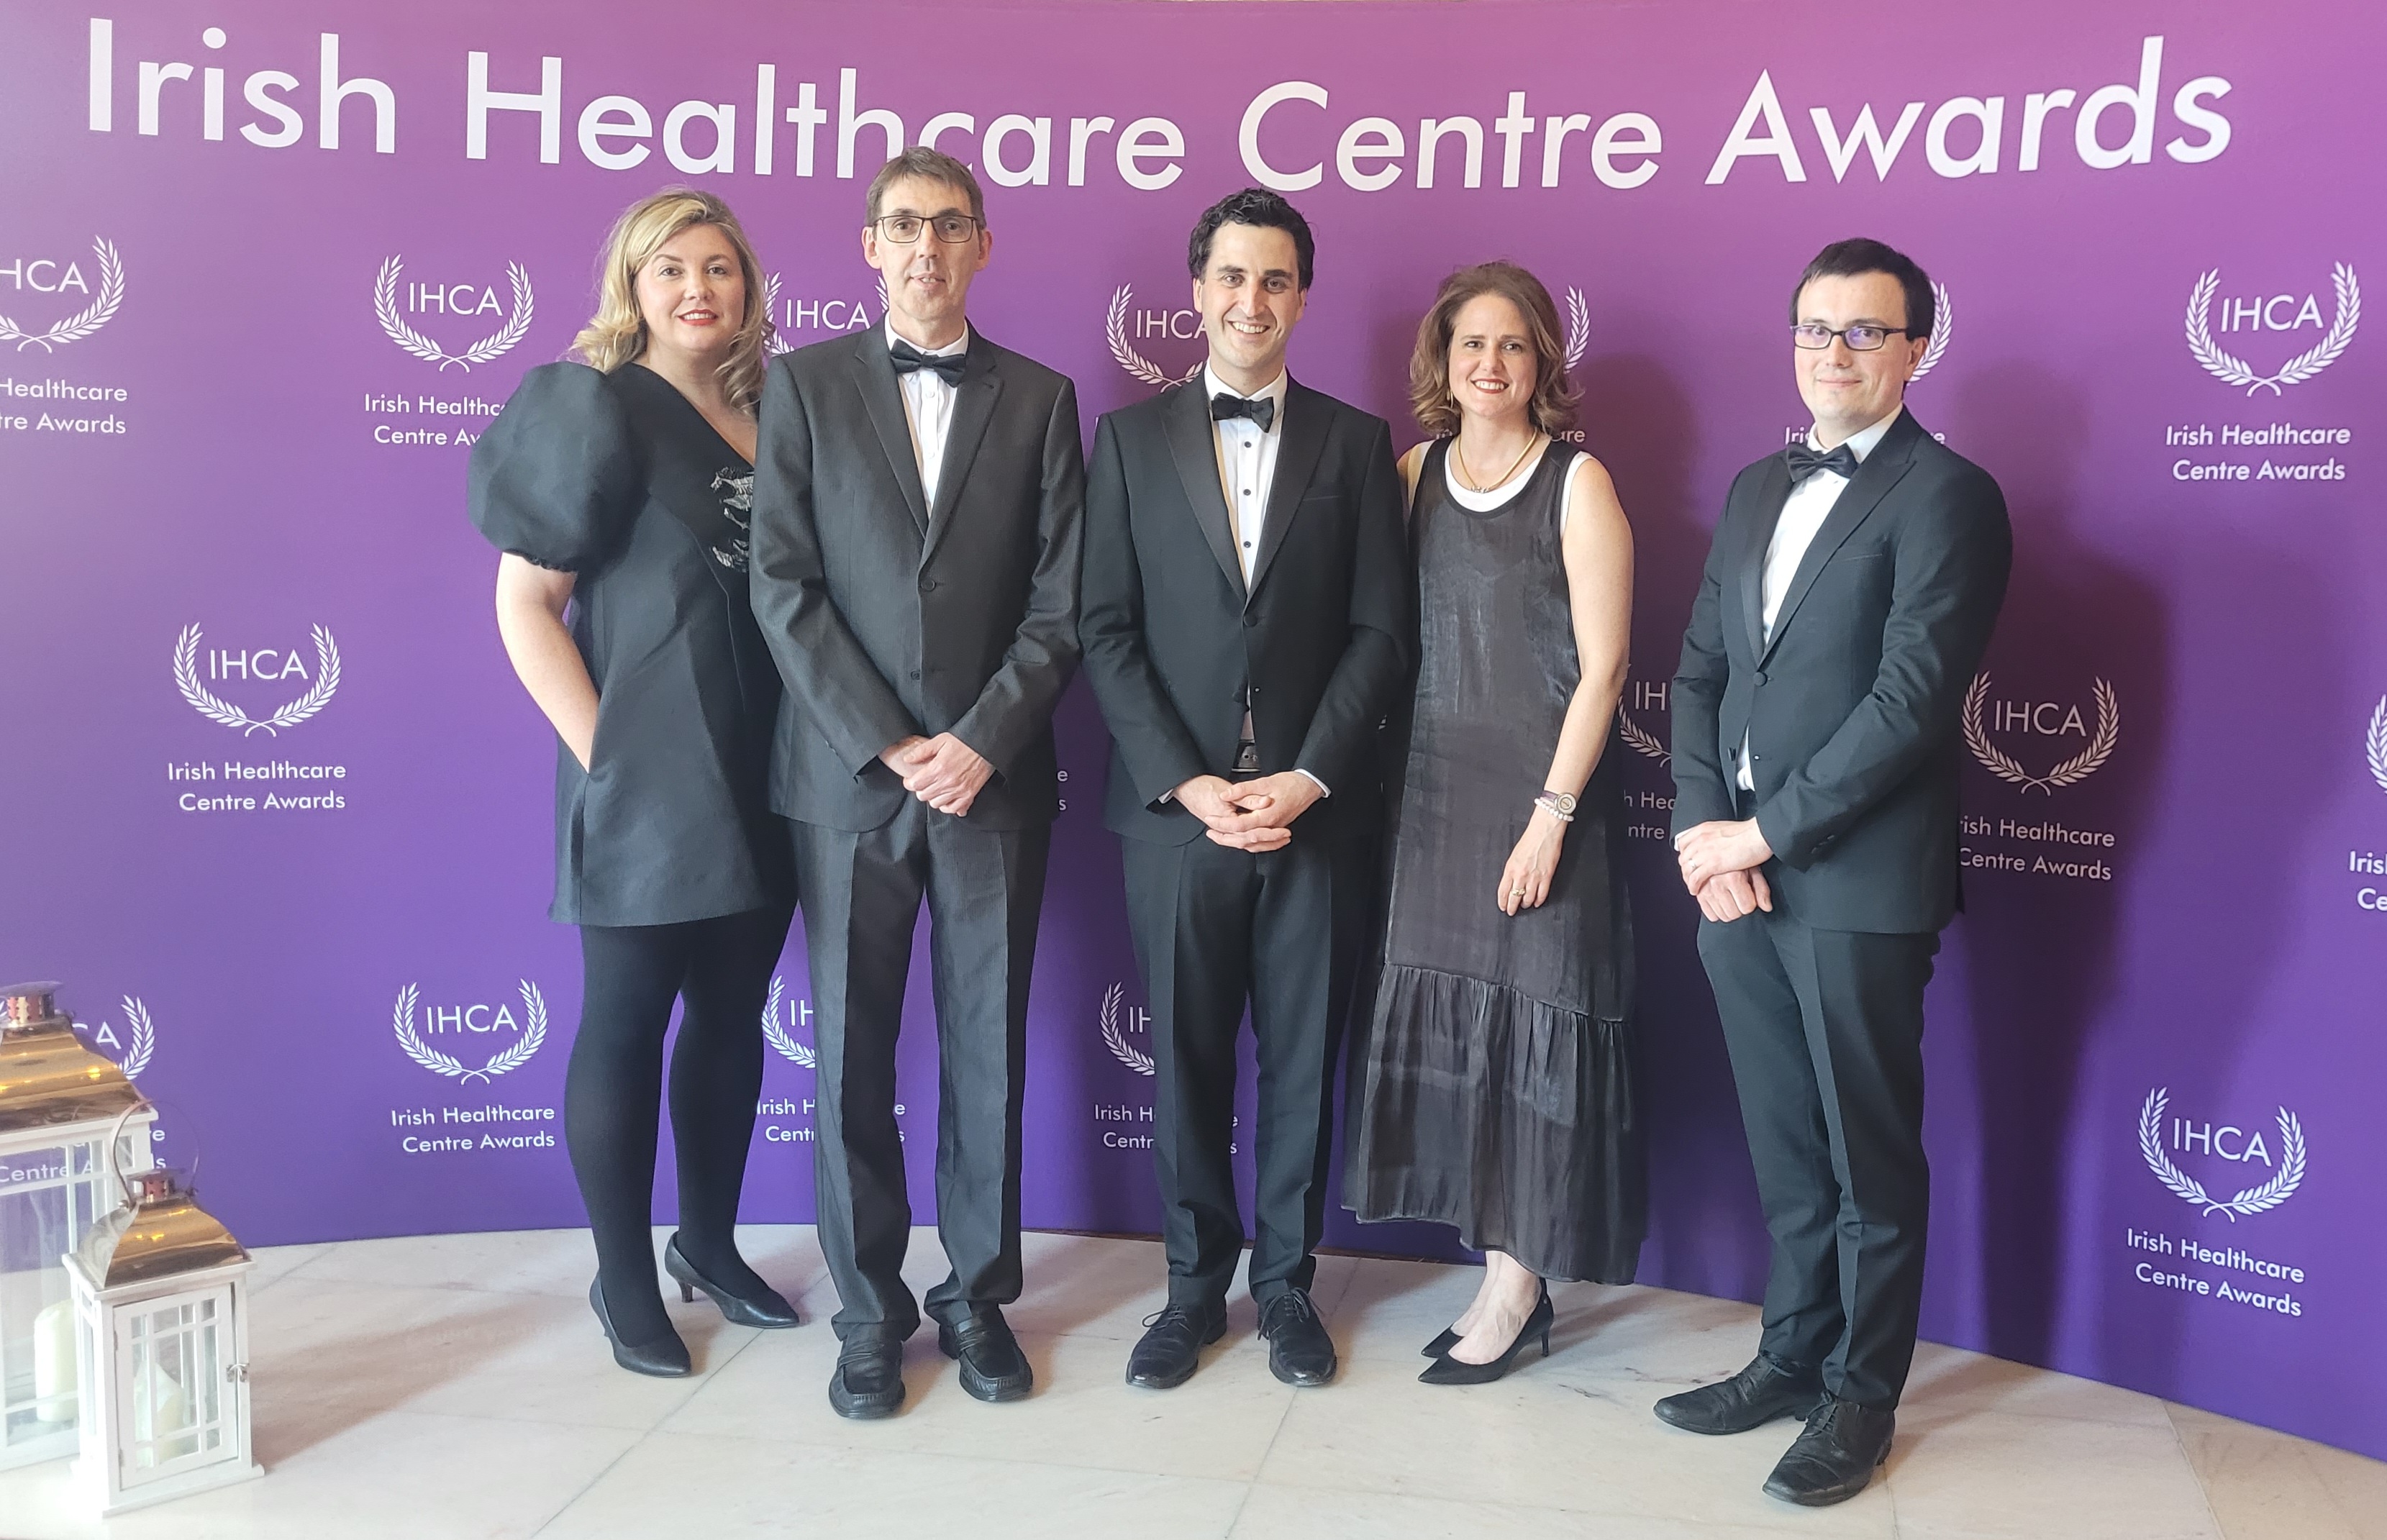 Irish Healthcare centre awards group